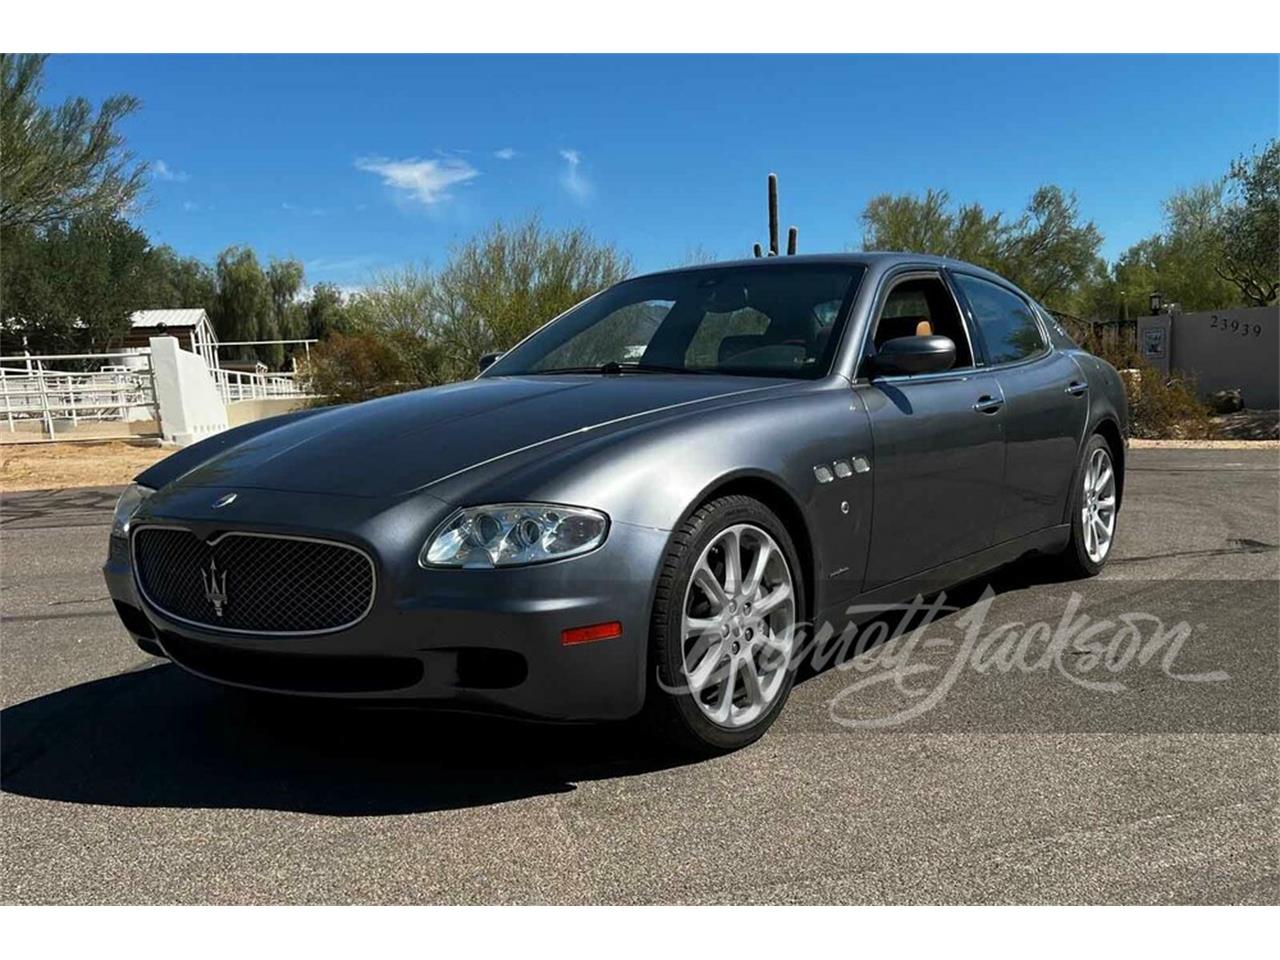 For Sale at Auction: 2007 Maserati Quattroporte in Scottsdale, Arizona for sale in Scottsdale, AZ